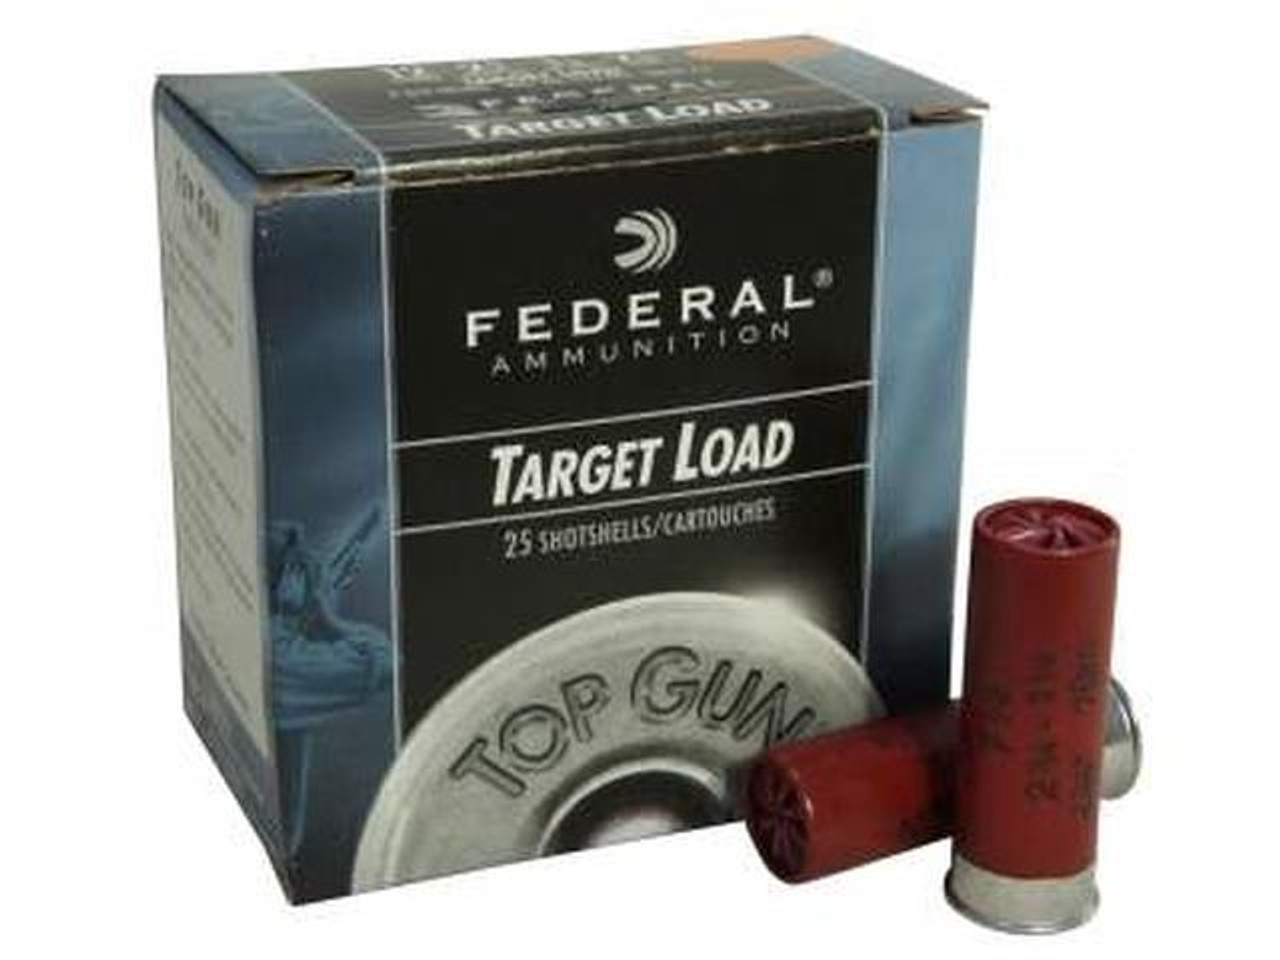 Target load. 12-Gauge Shotshell. Калибр 12 ga 3",12 ga 2 одна четвёртая. Box for 12 Shotshell. 12-Gauge Shotshell big Box.